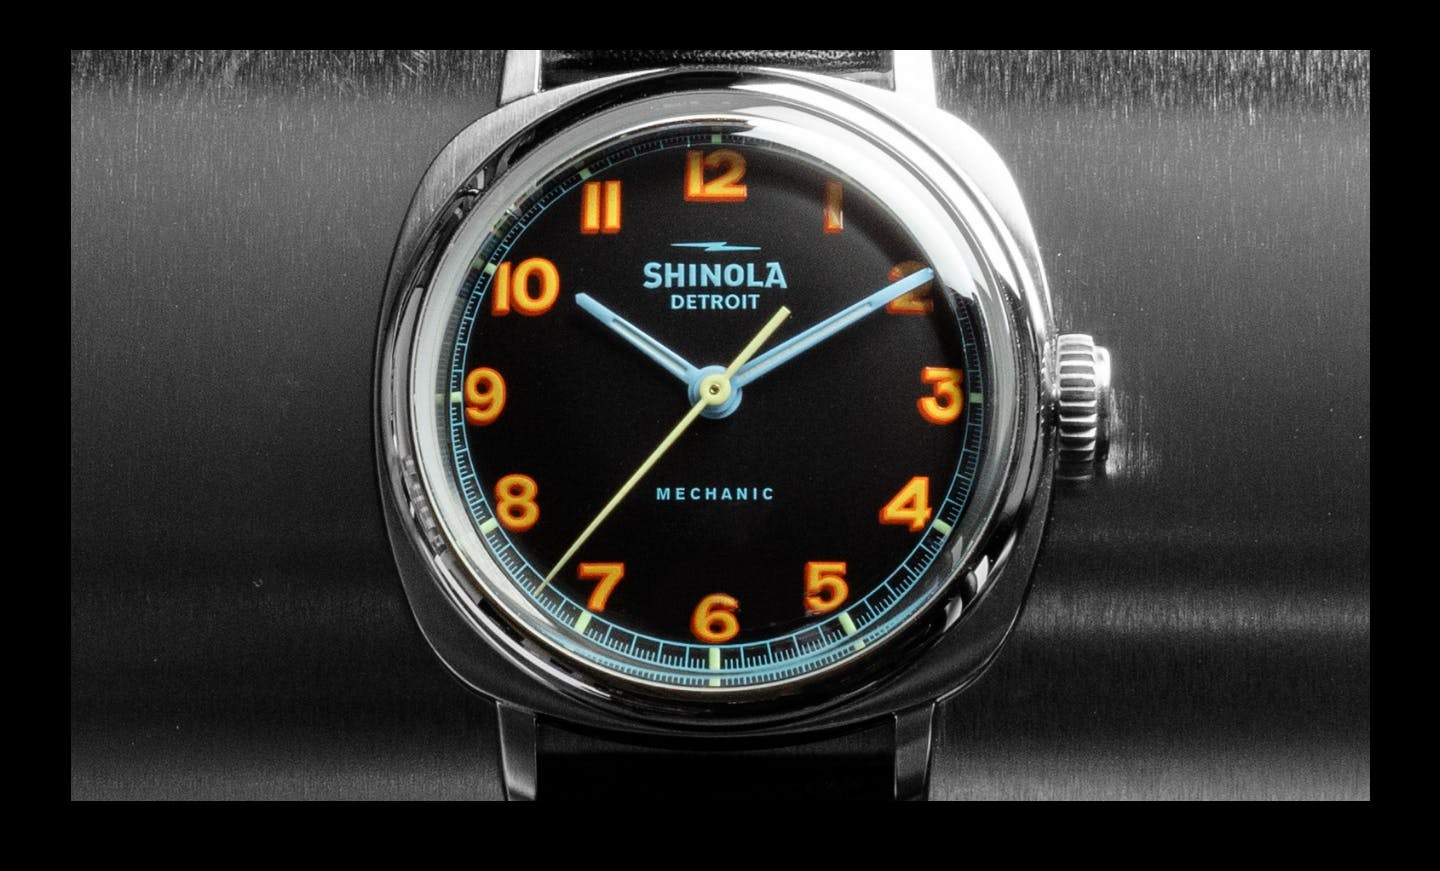 The front of the Shinola Mechanic watch